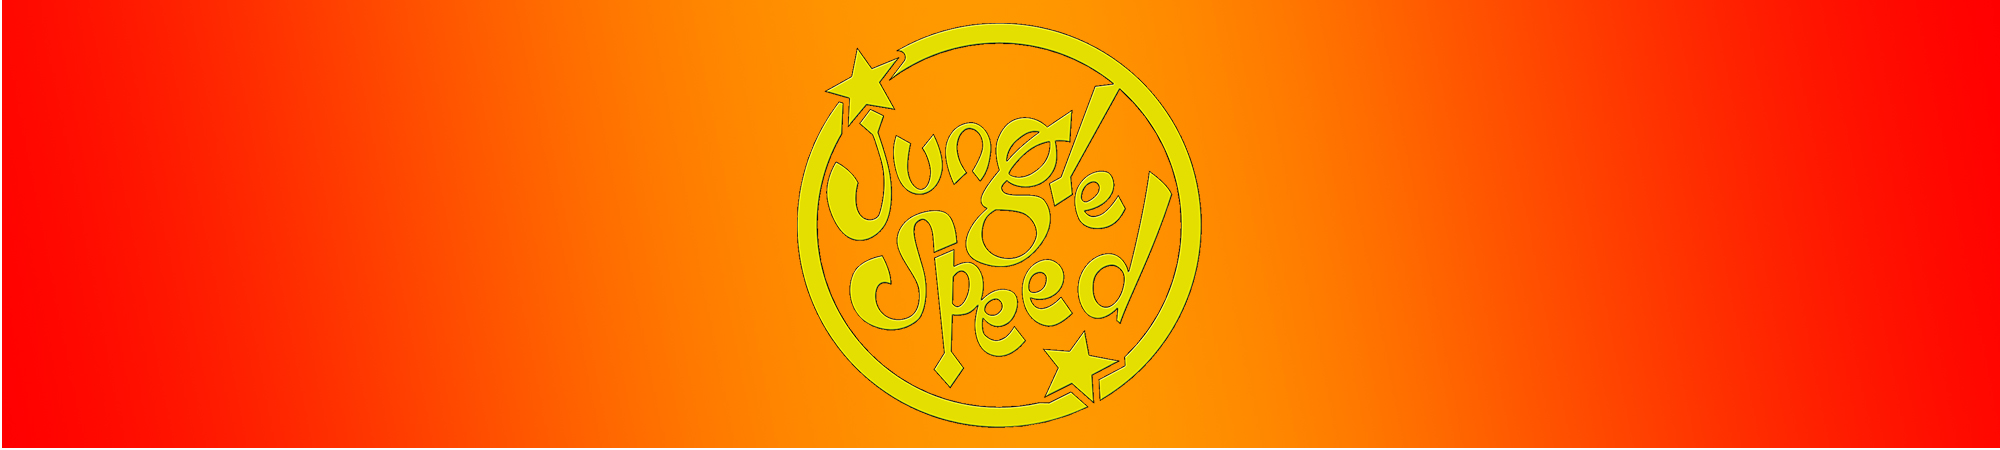 Jungle Speed Regeln